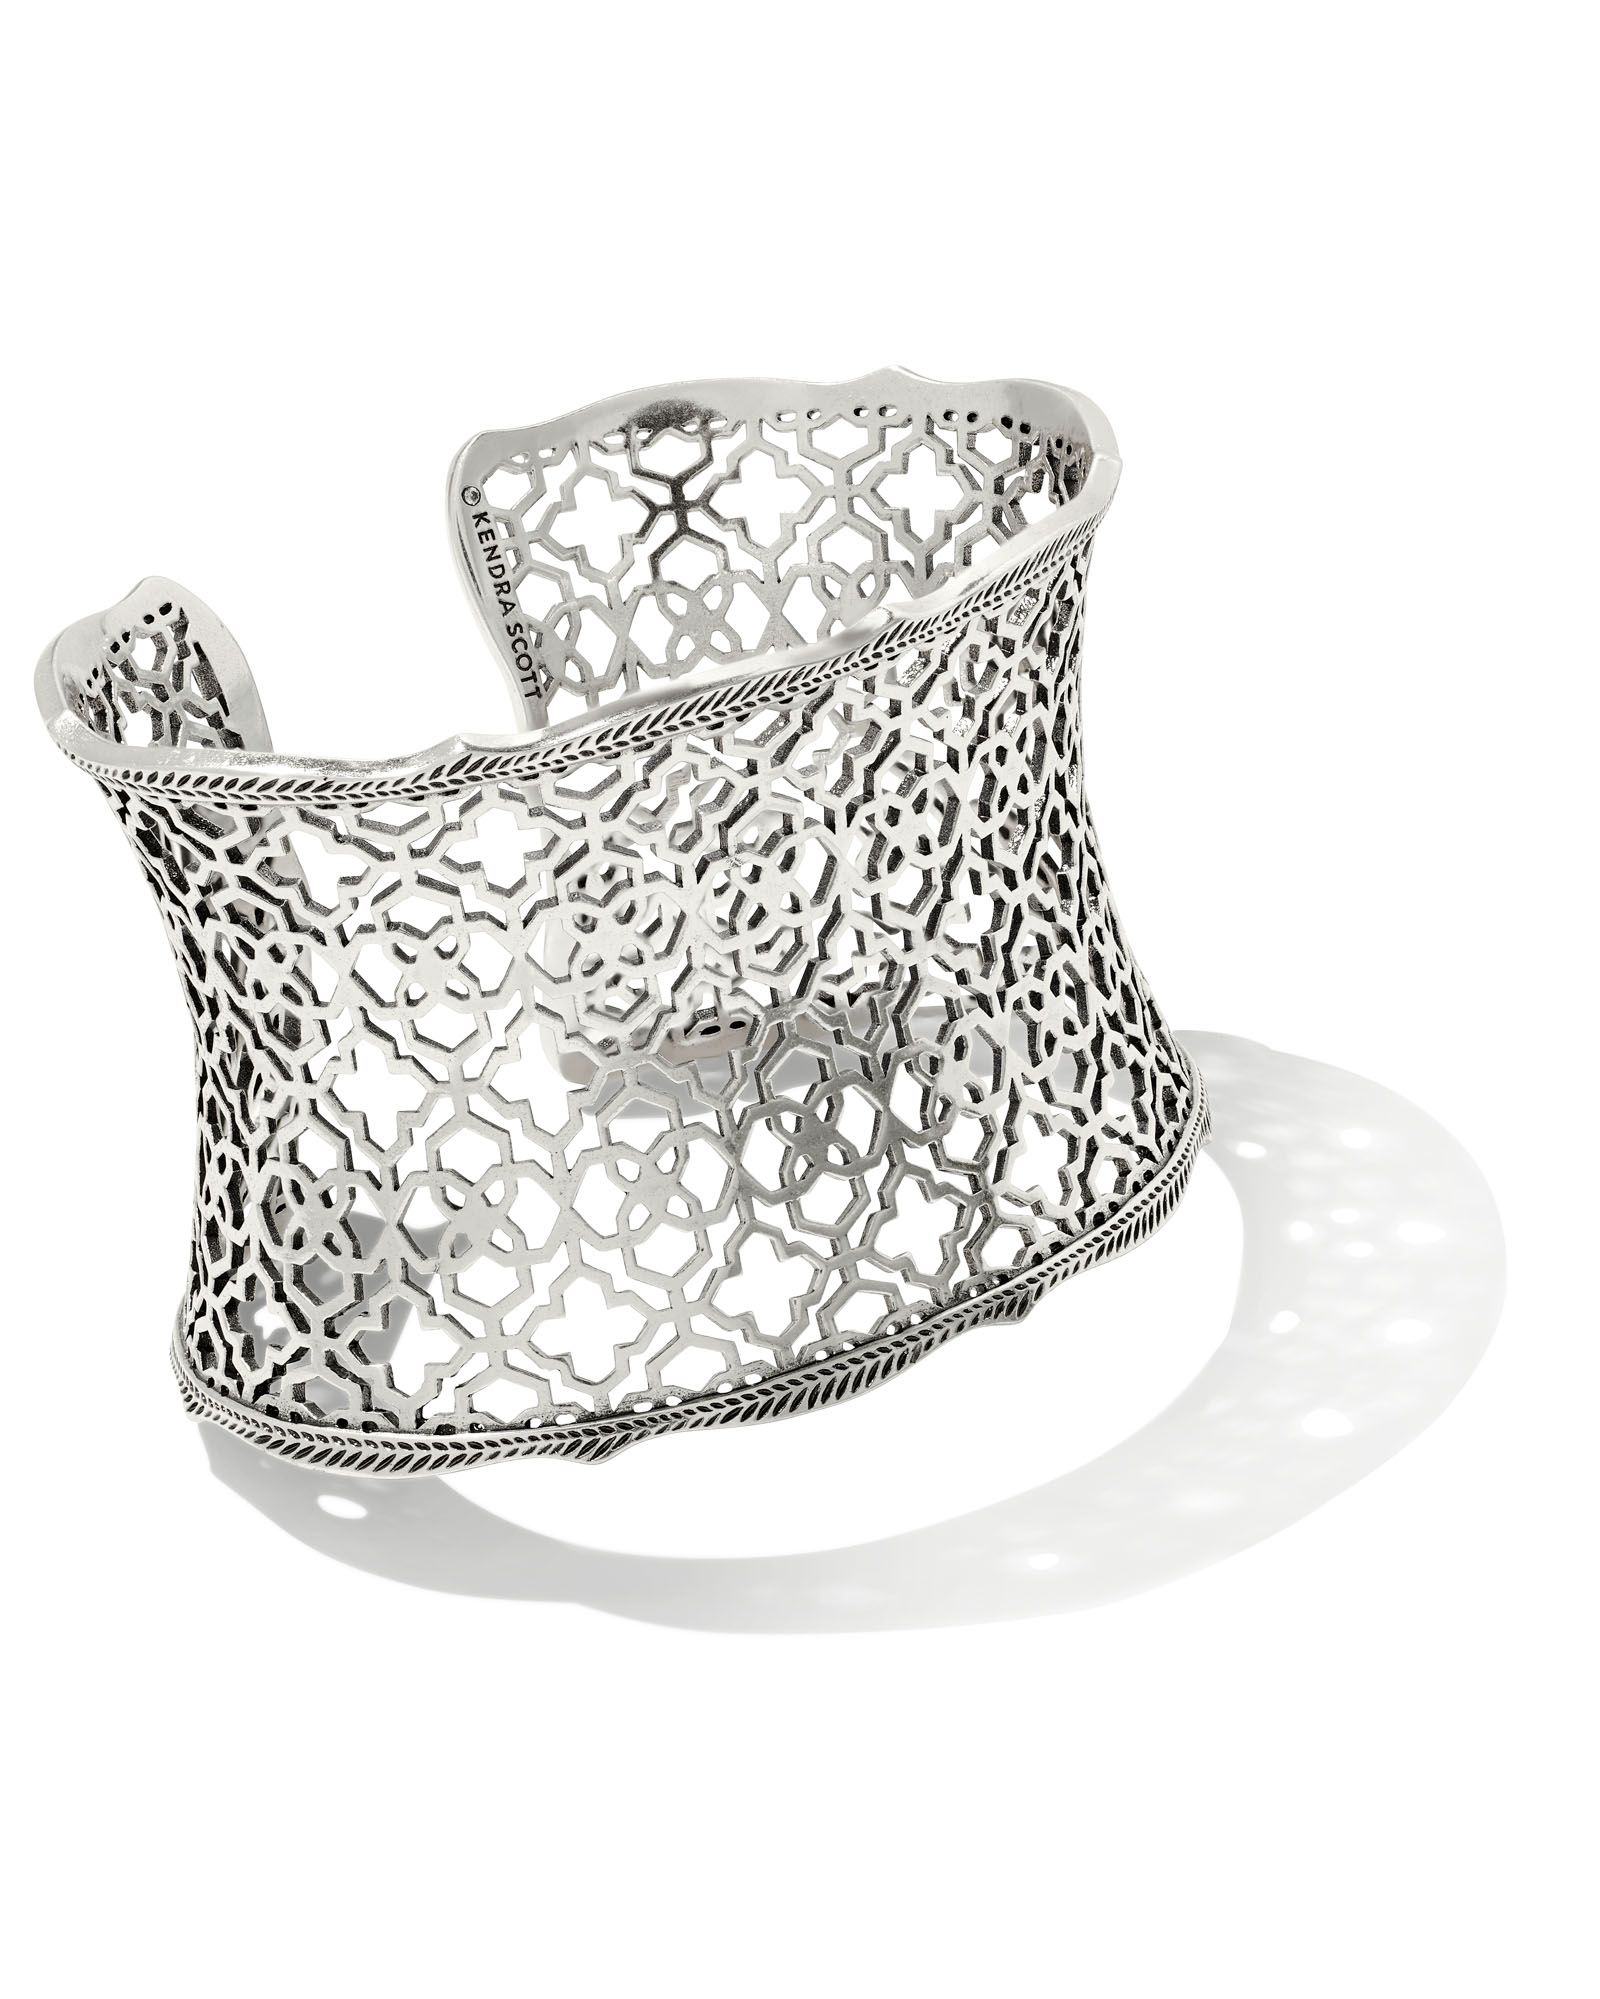 Candice Gold Cuff Bracelet in Silver Filigree | Kendra Scott | Kendra Scott